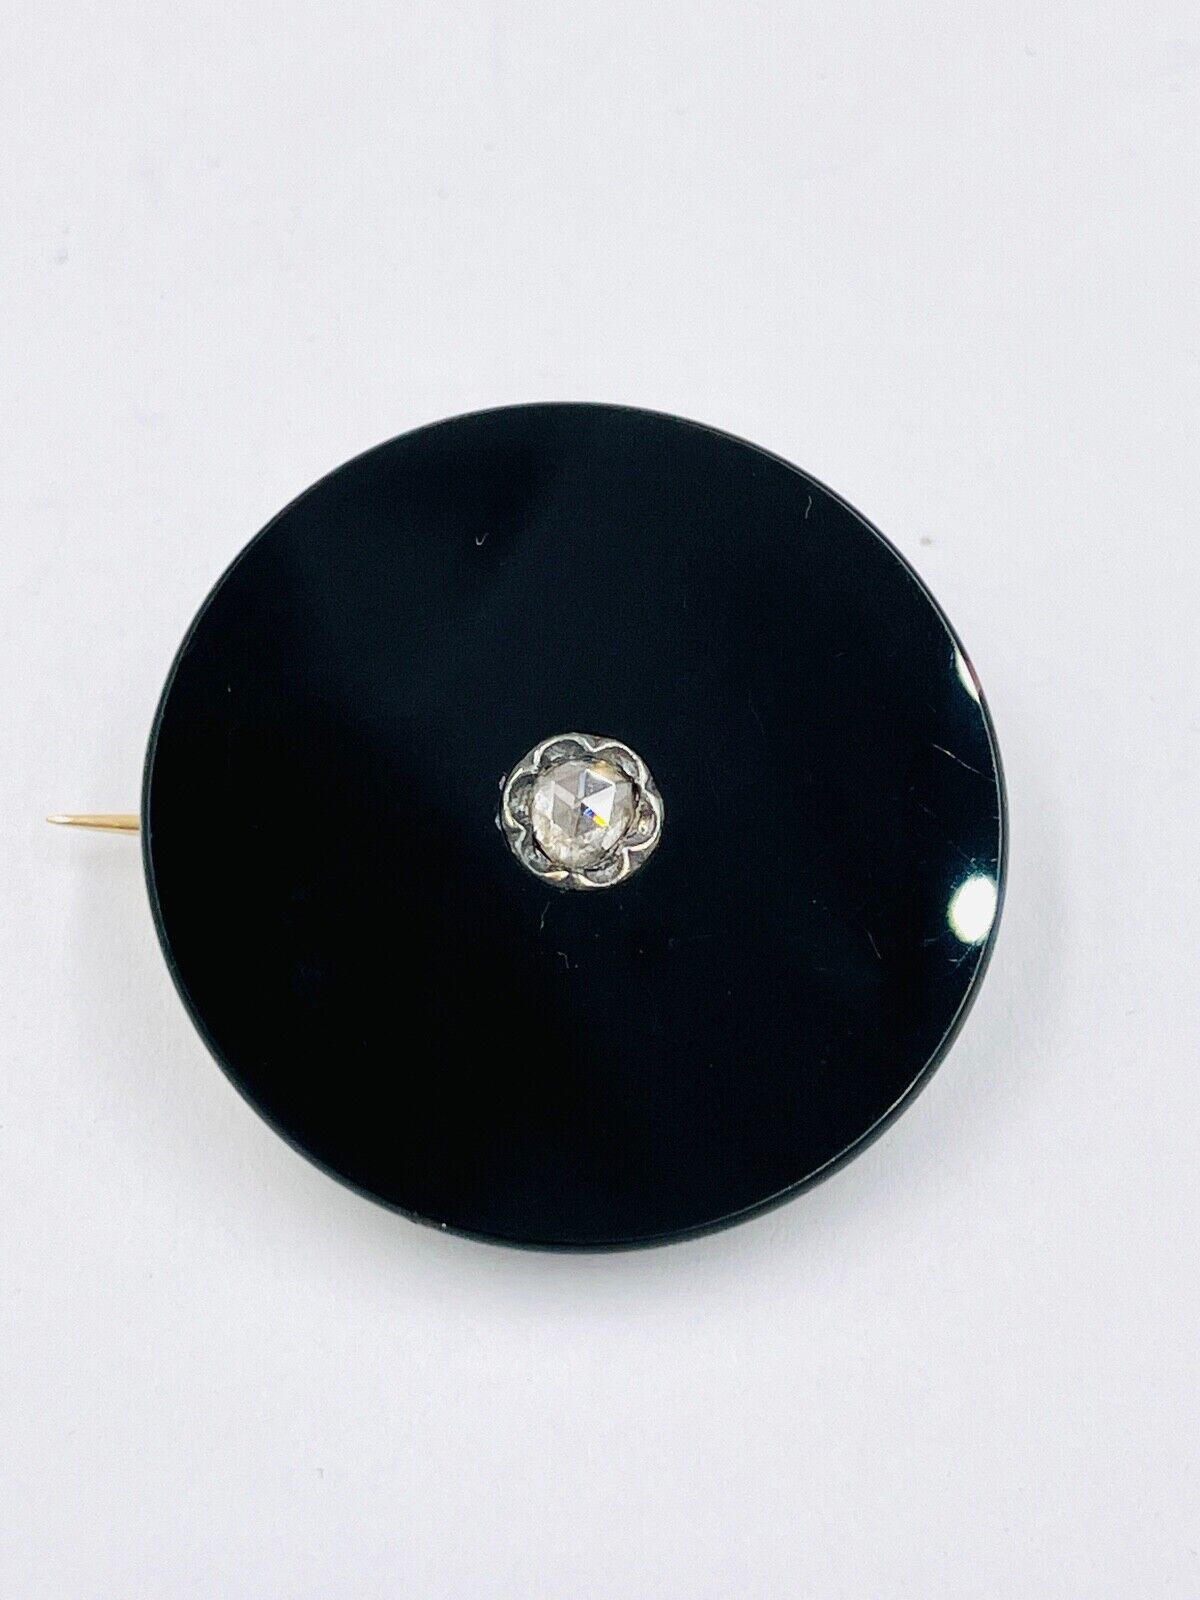 Antique Victorian 14K Gold Onyx Diamond mourning Brooch Pendant Pin Rose cut